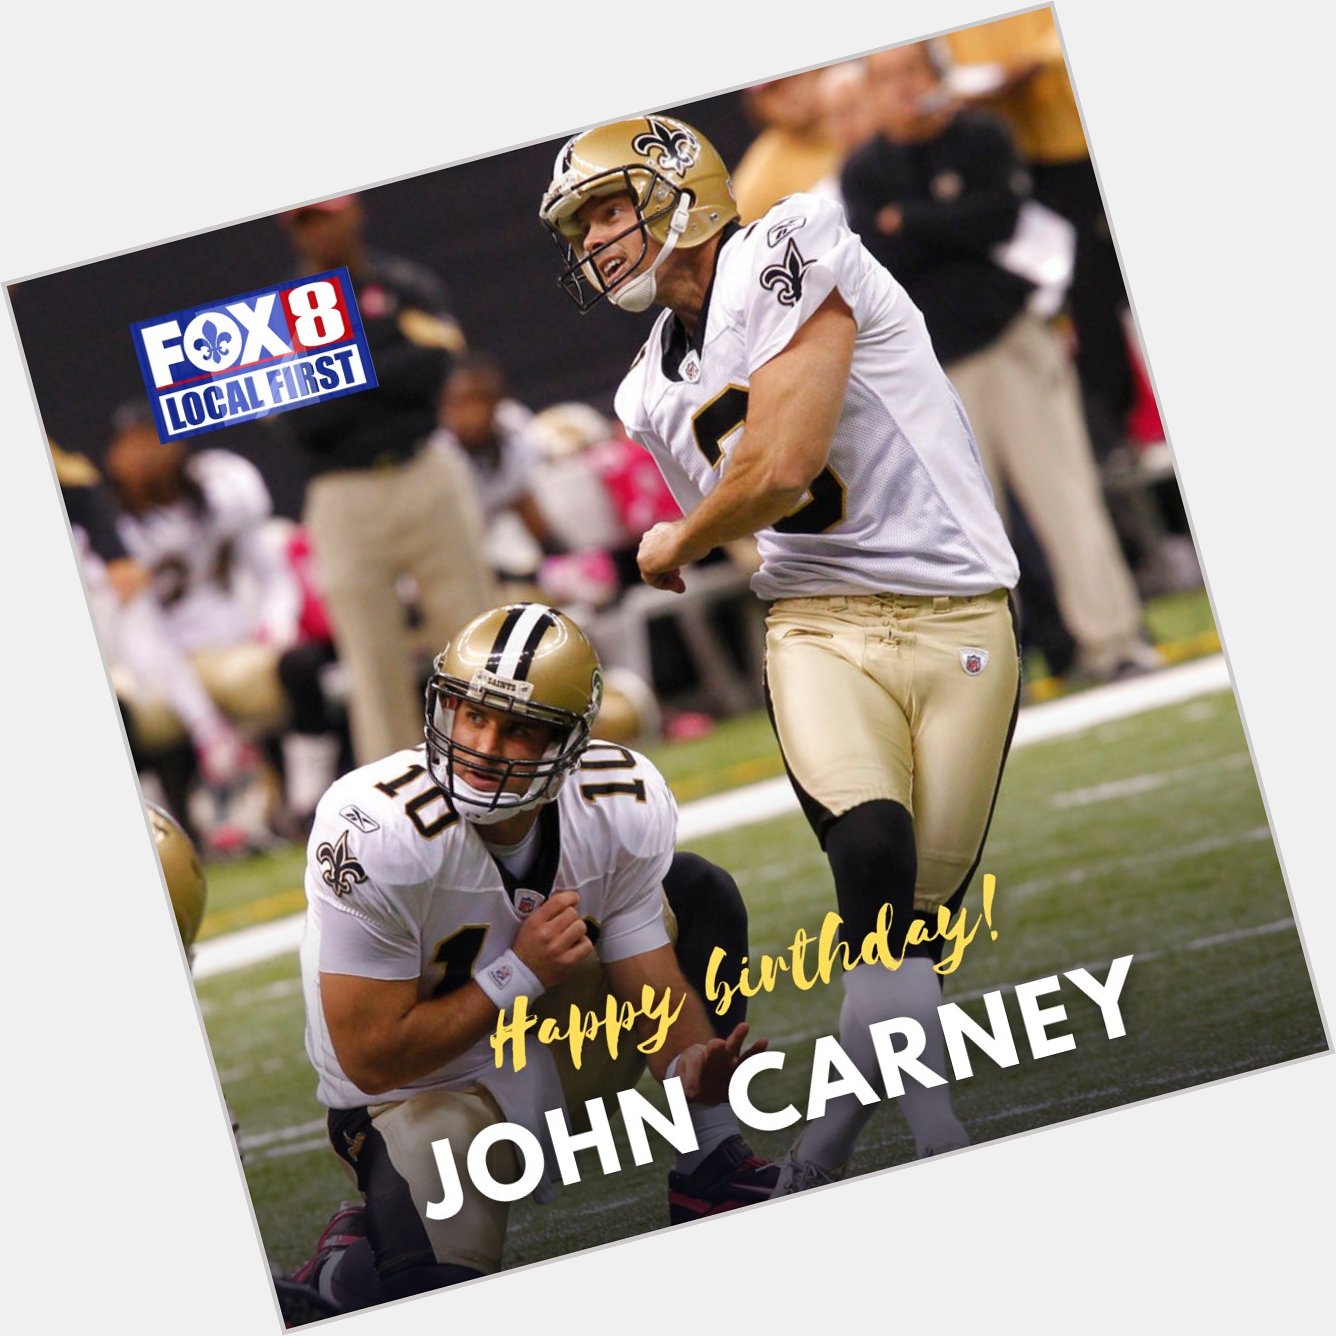 Happy 59th birthday to former Saints kicker John Carney! 